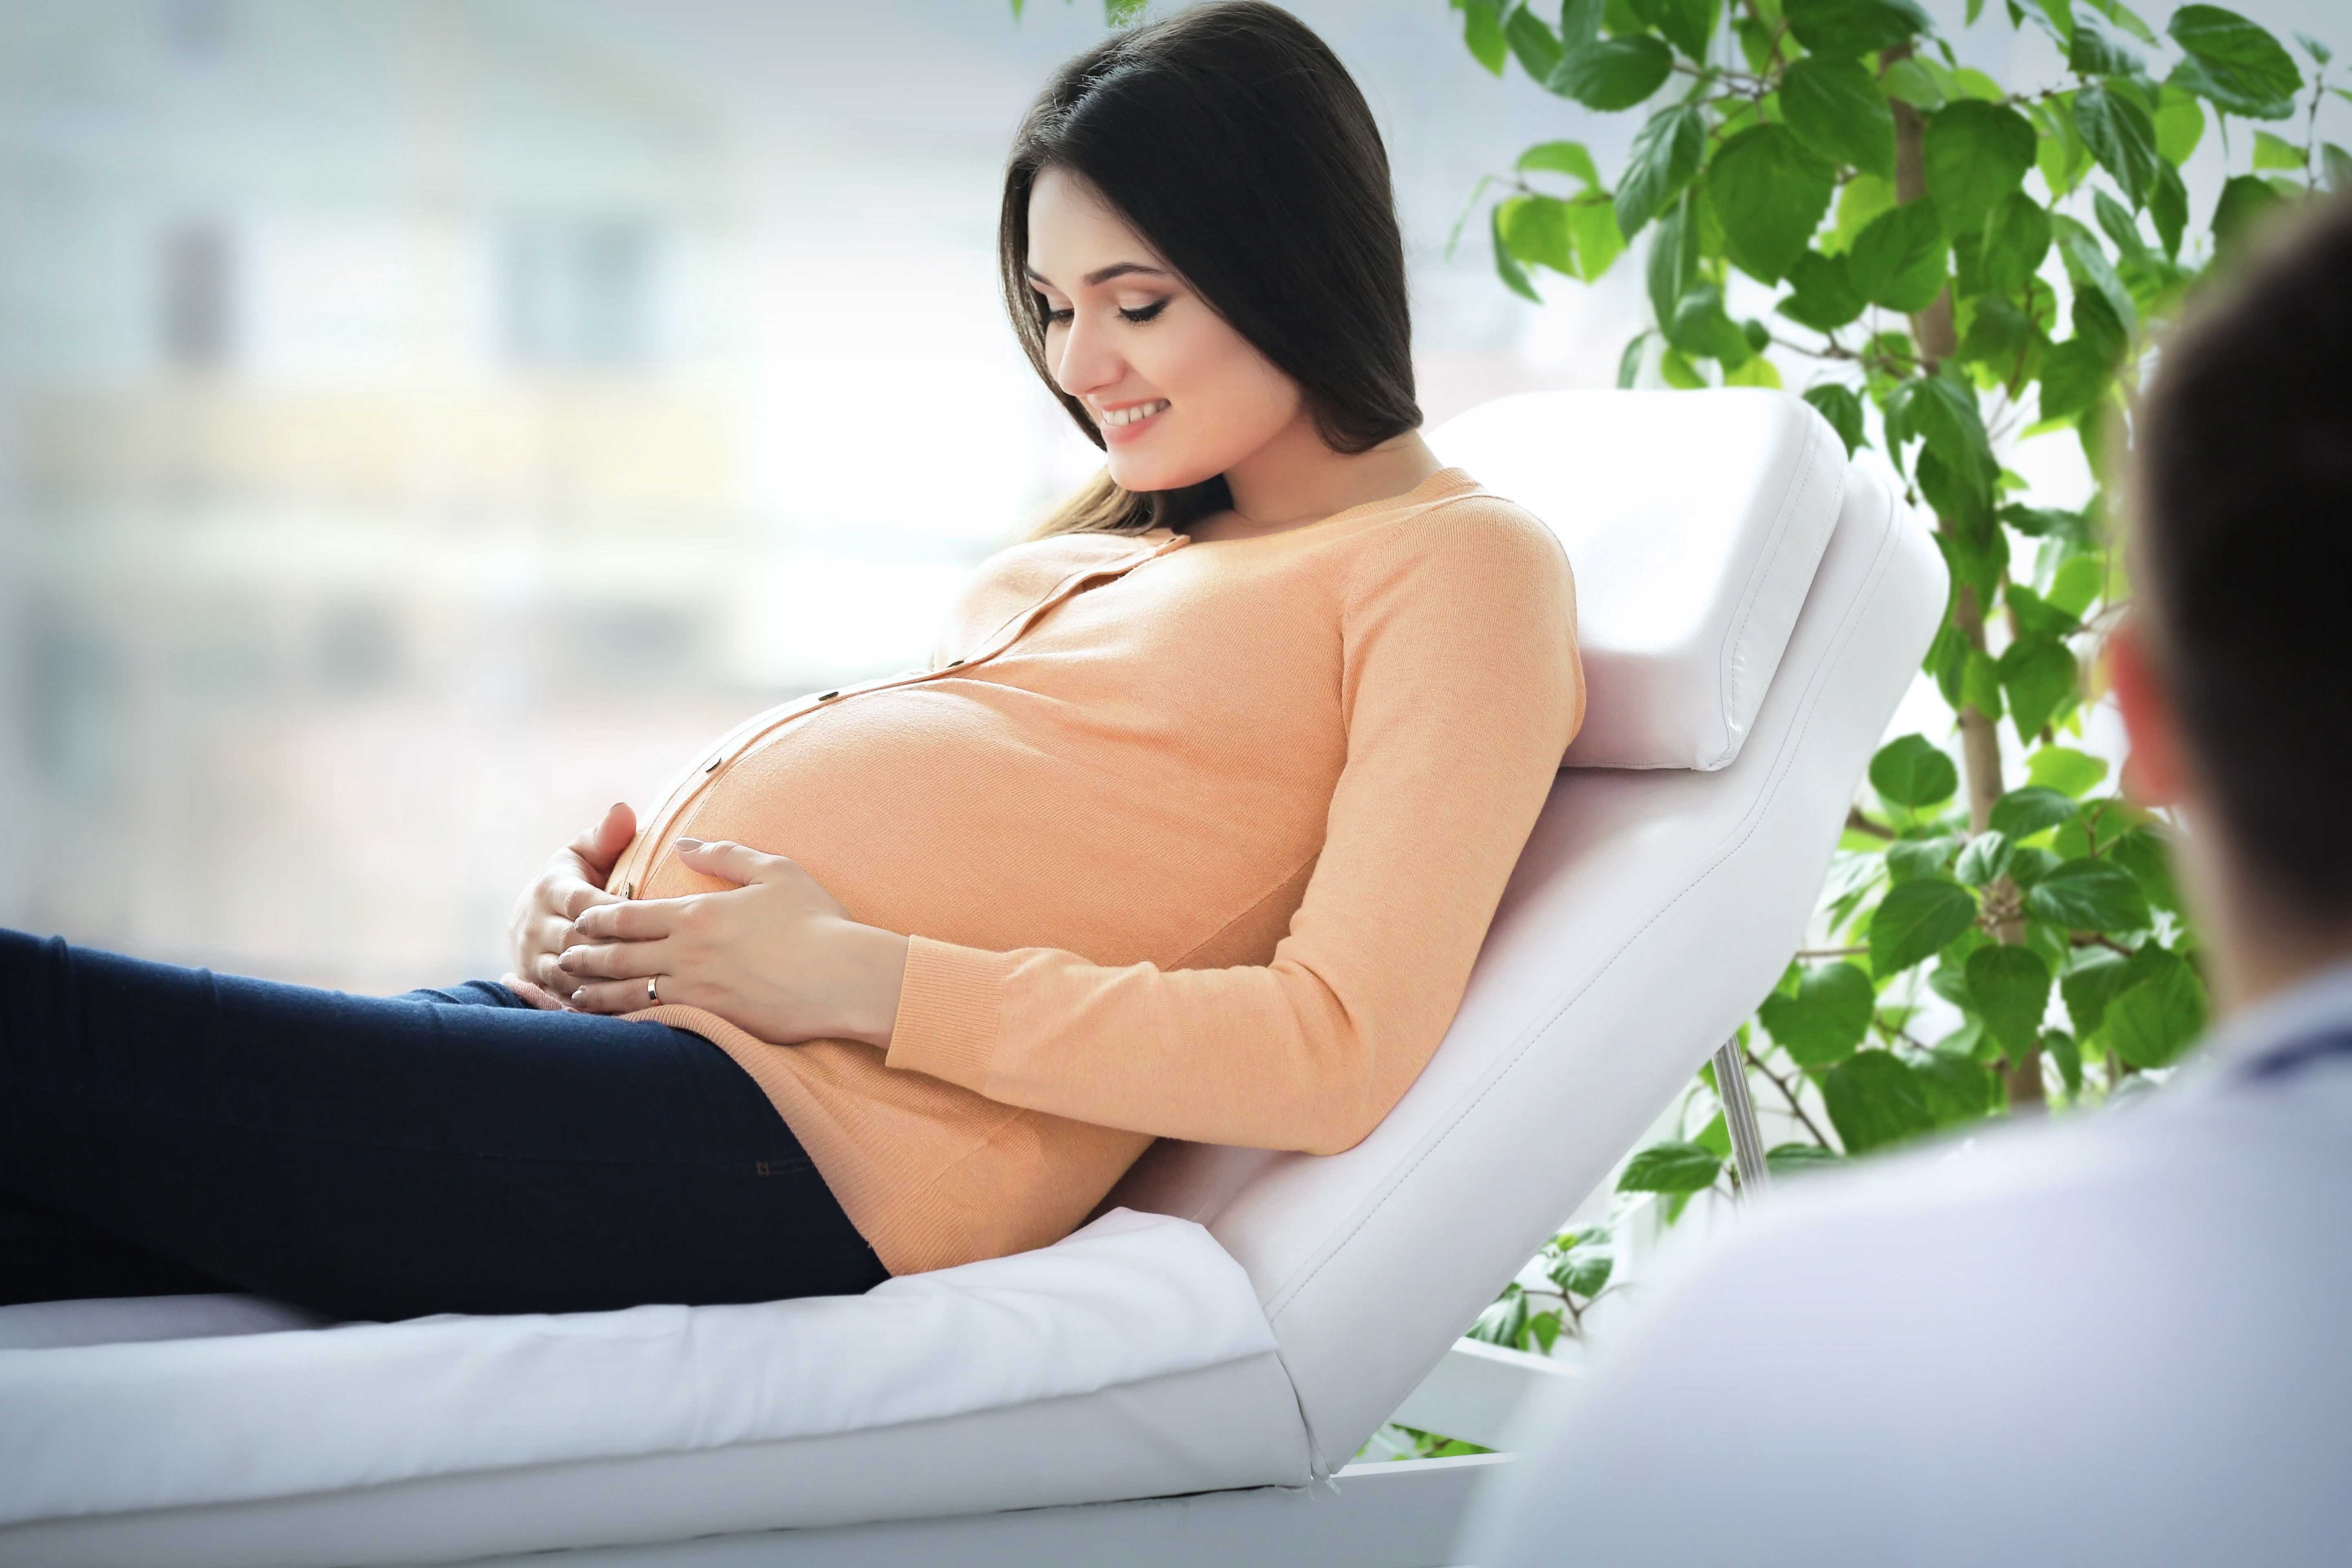 Sense4Baby helpt zwangeren tijdens COVID-19